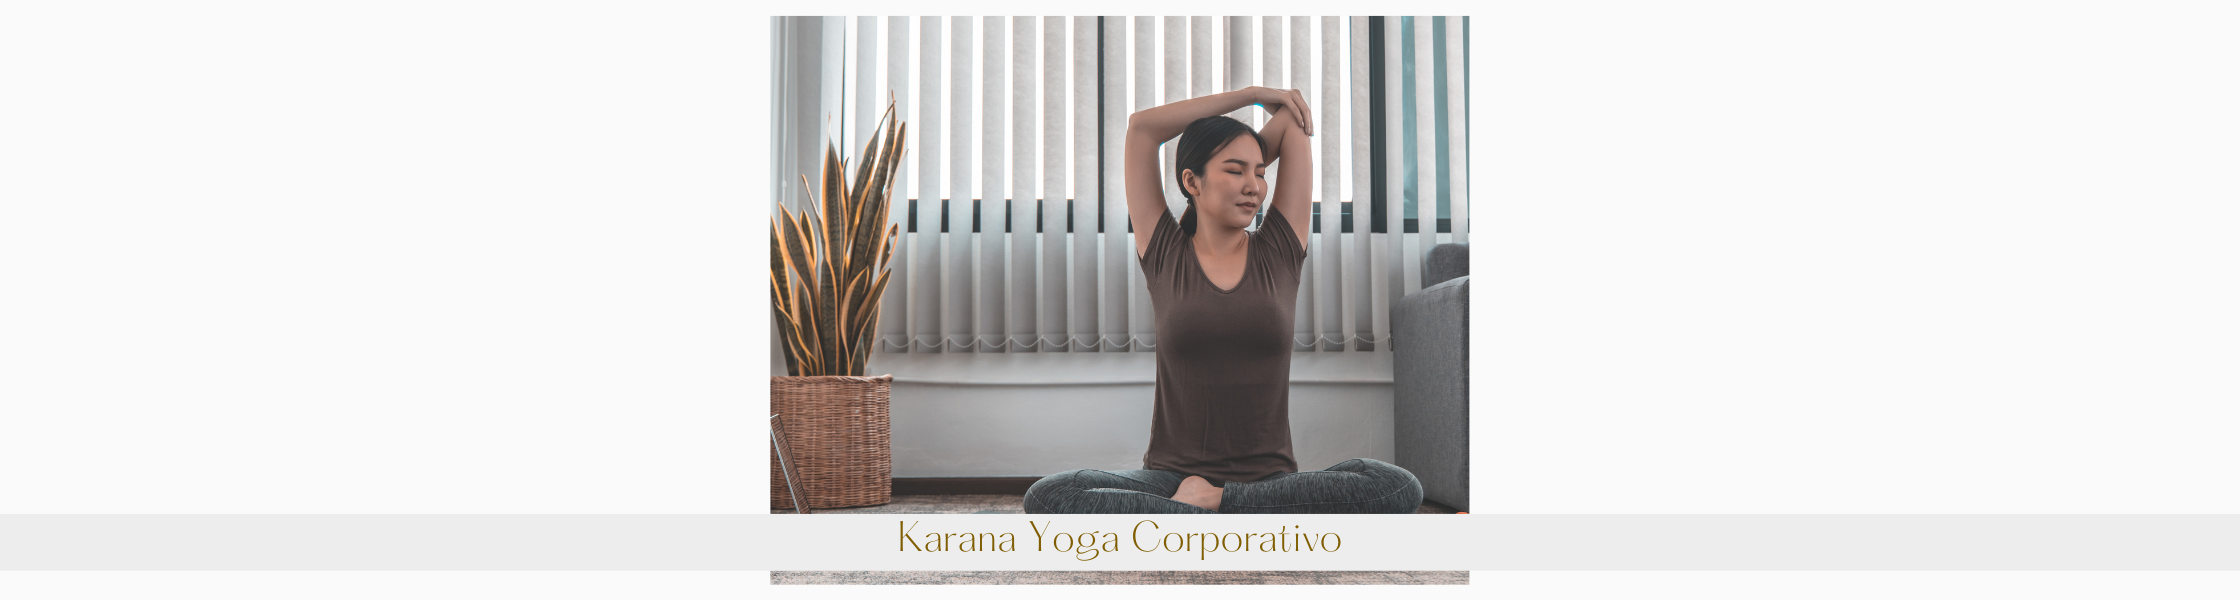 Karana Yoga Corporativo